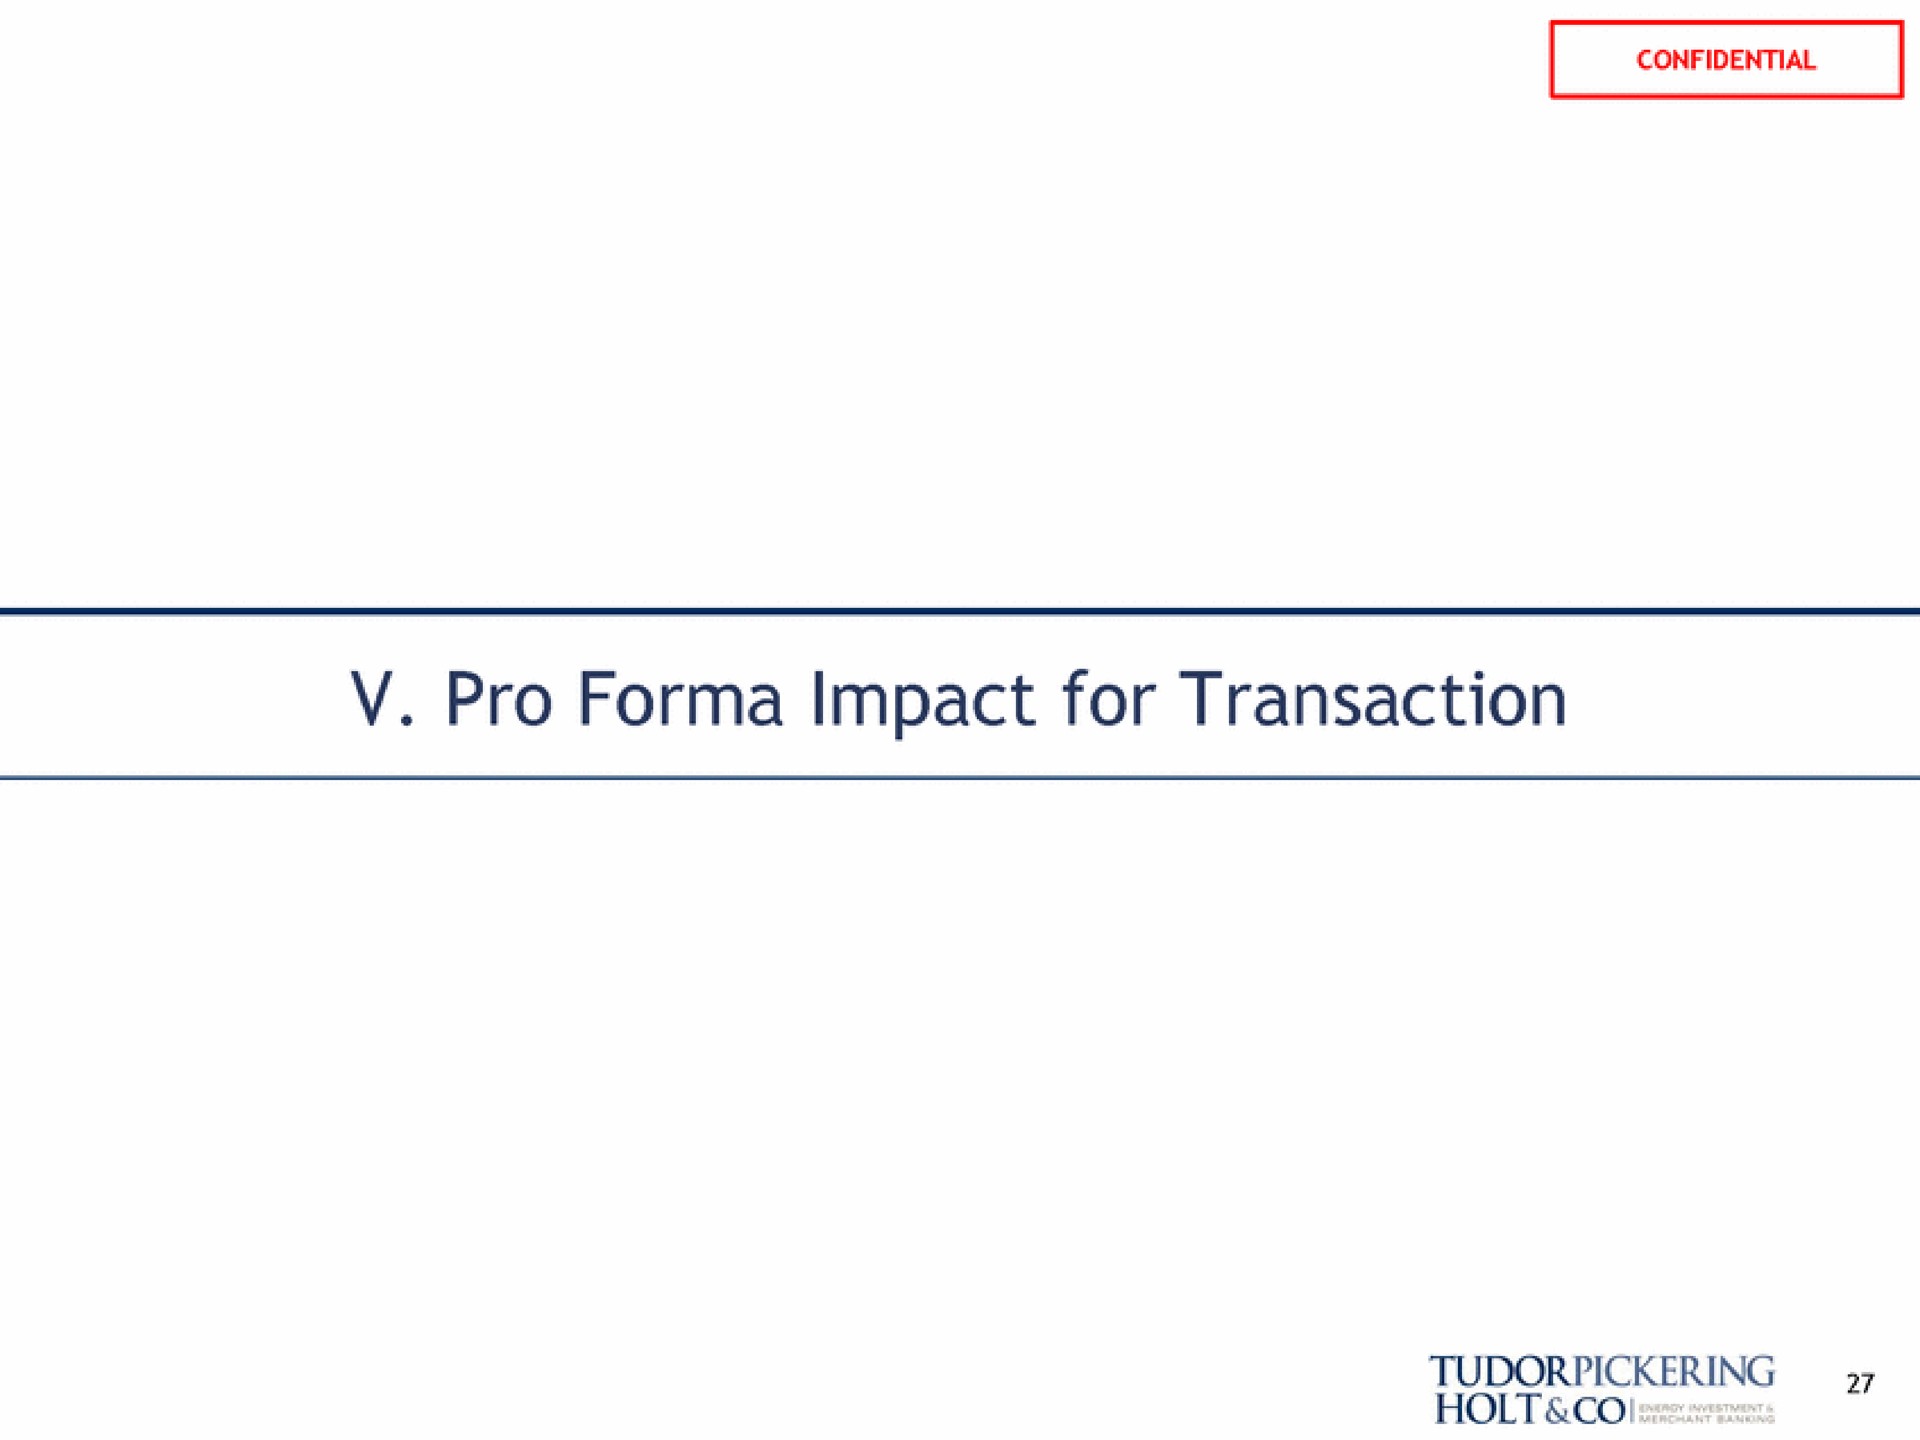 pro impact for transaction holt | Tudor, Pickering, Holt & Co